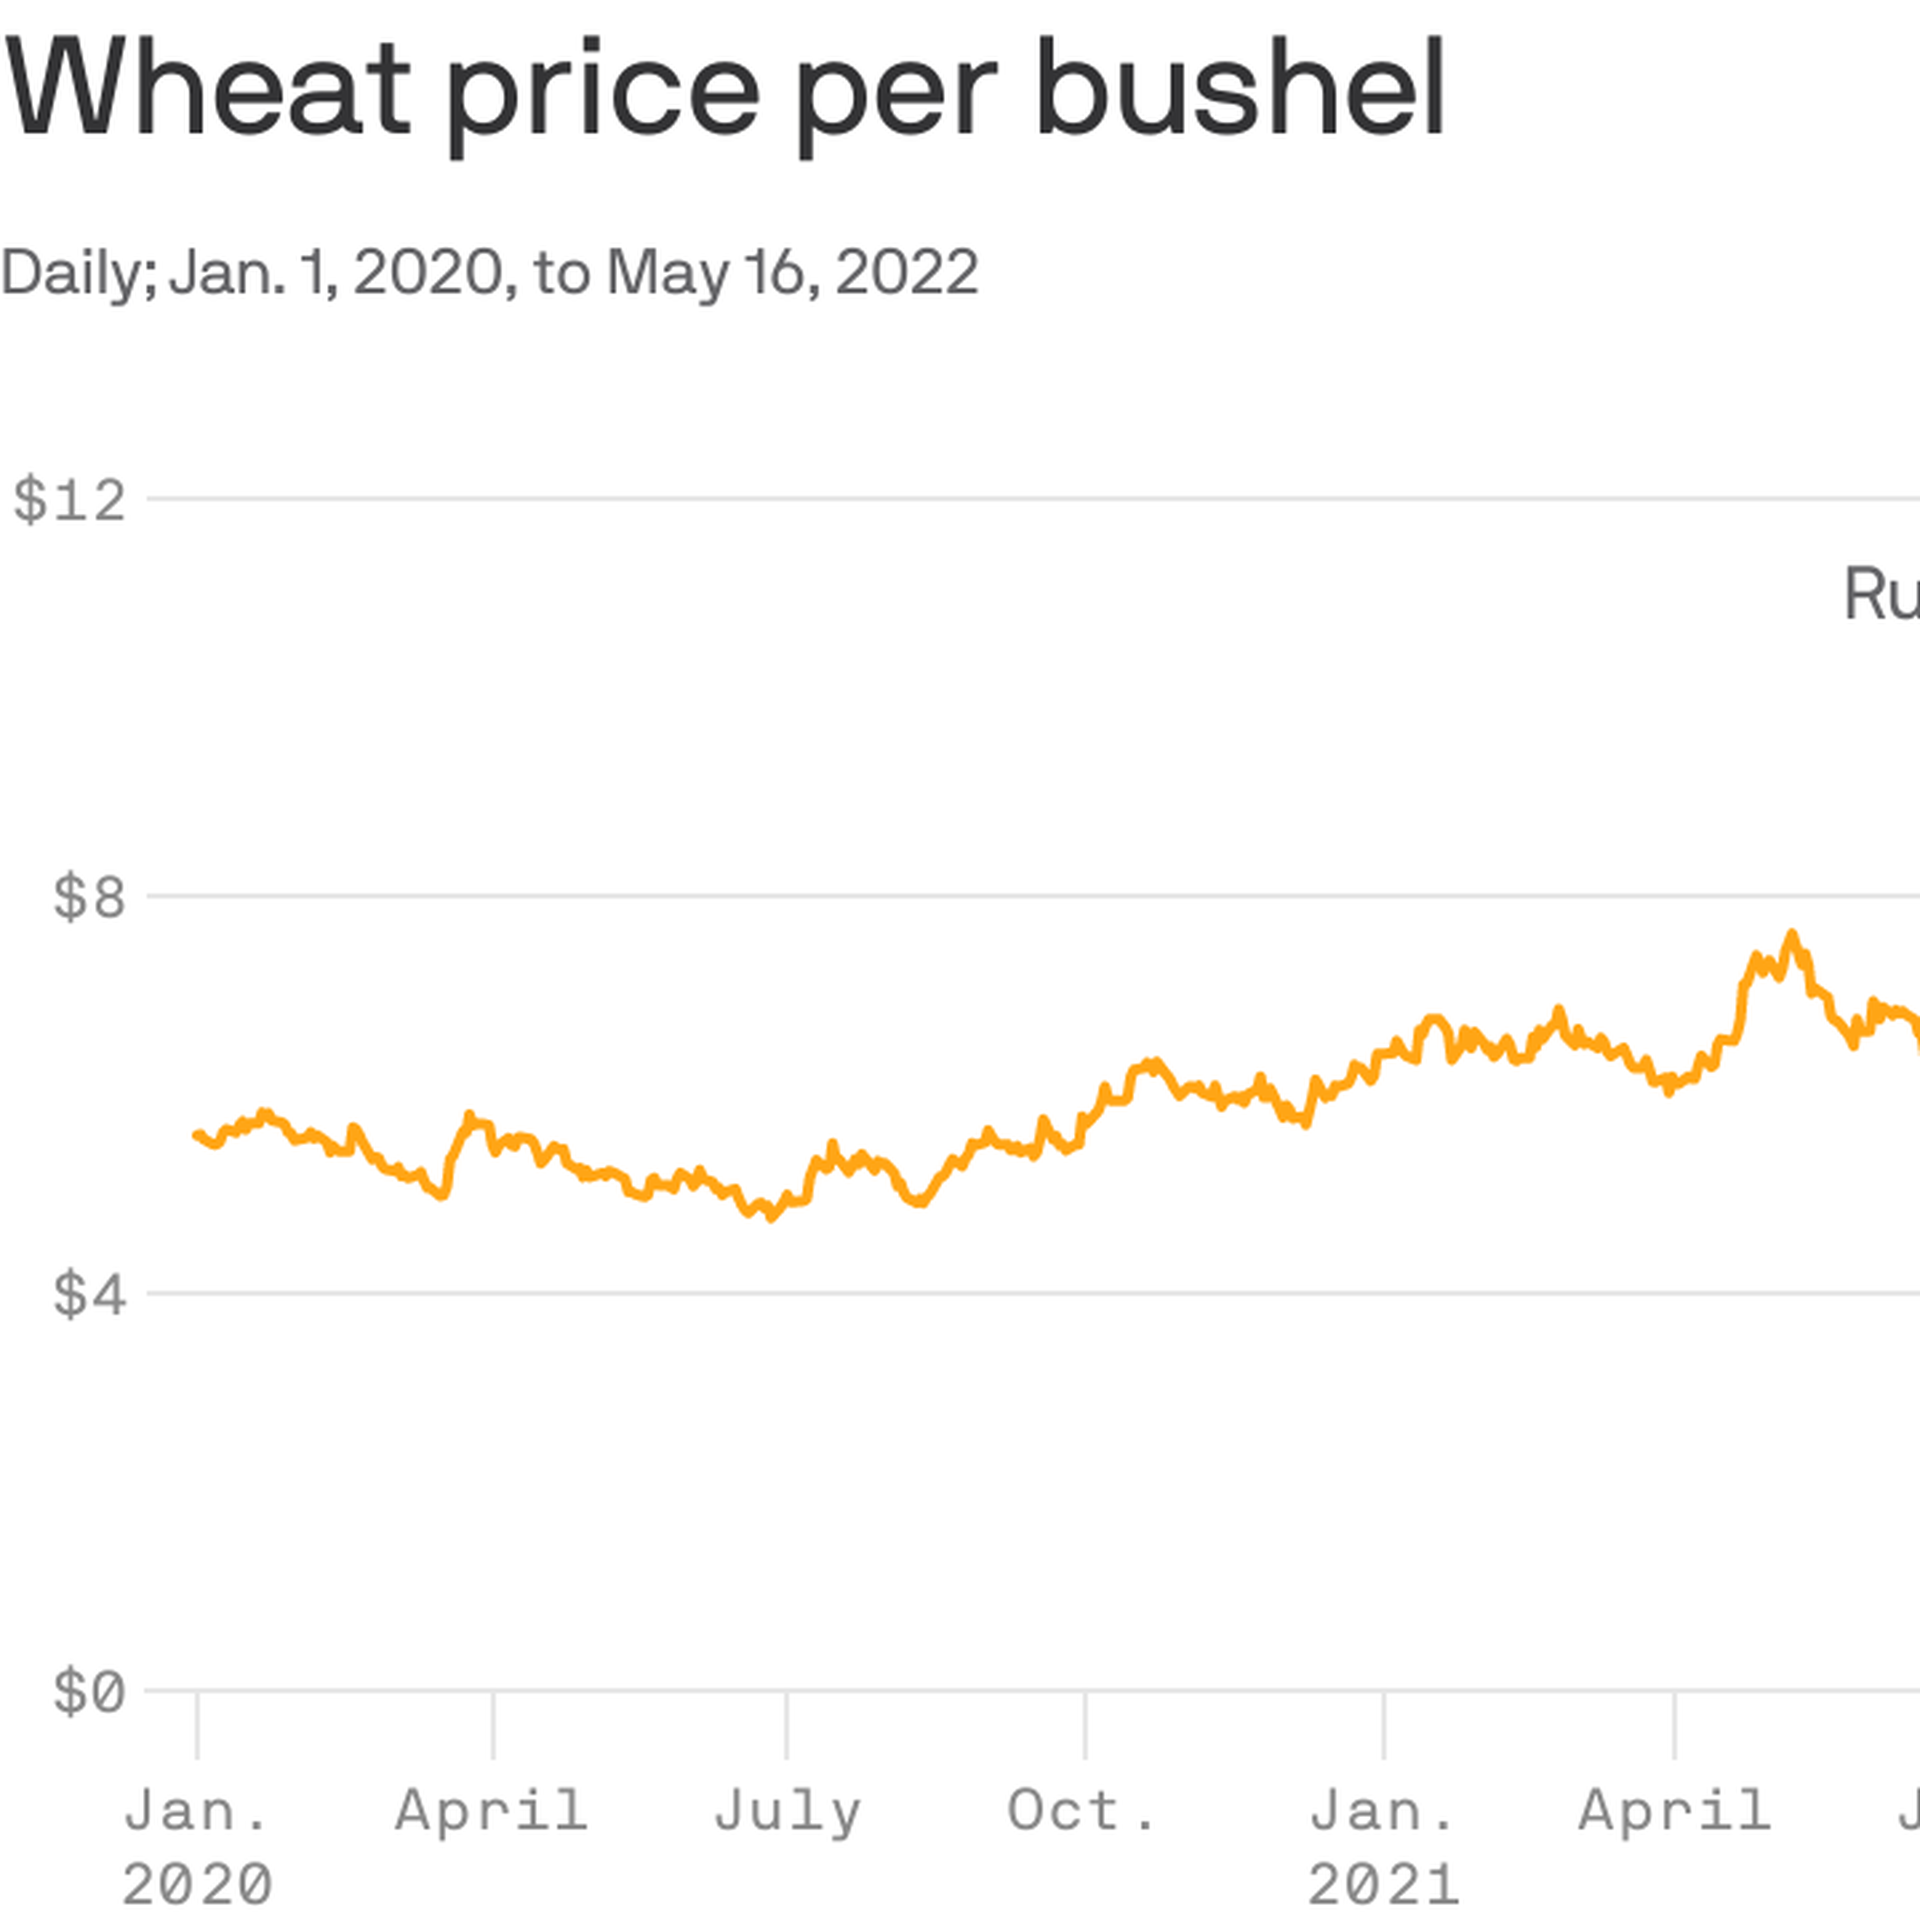 A chart showing wheat price per bushel